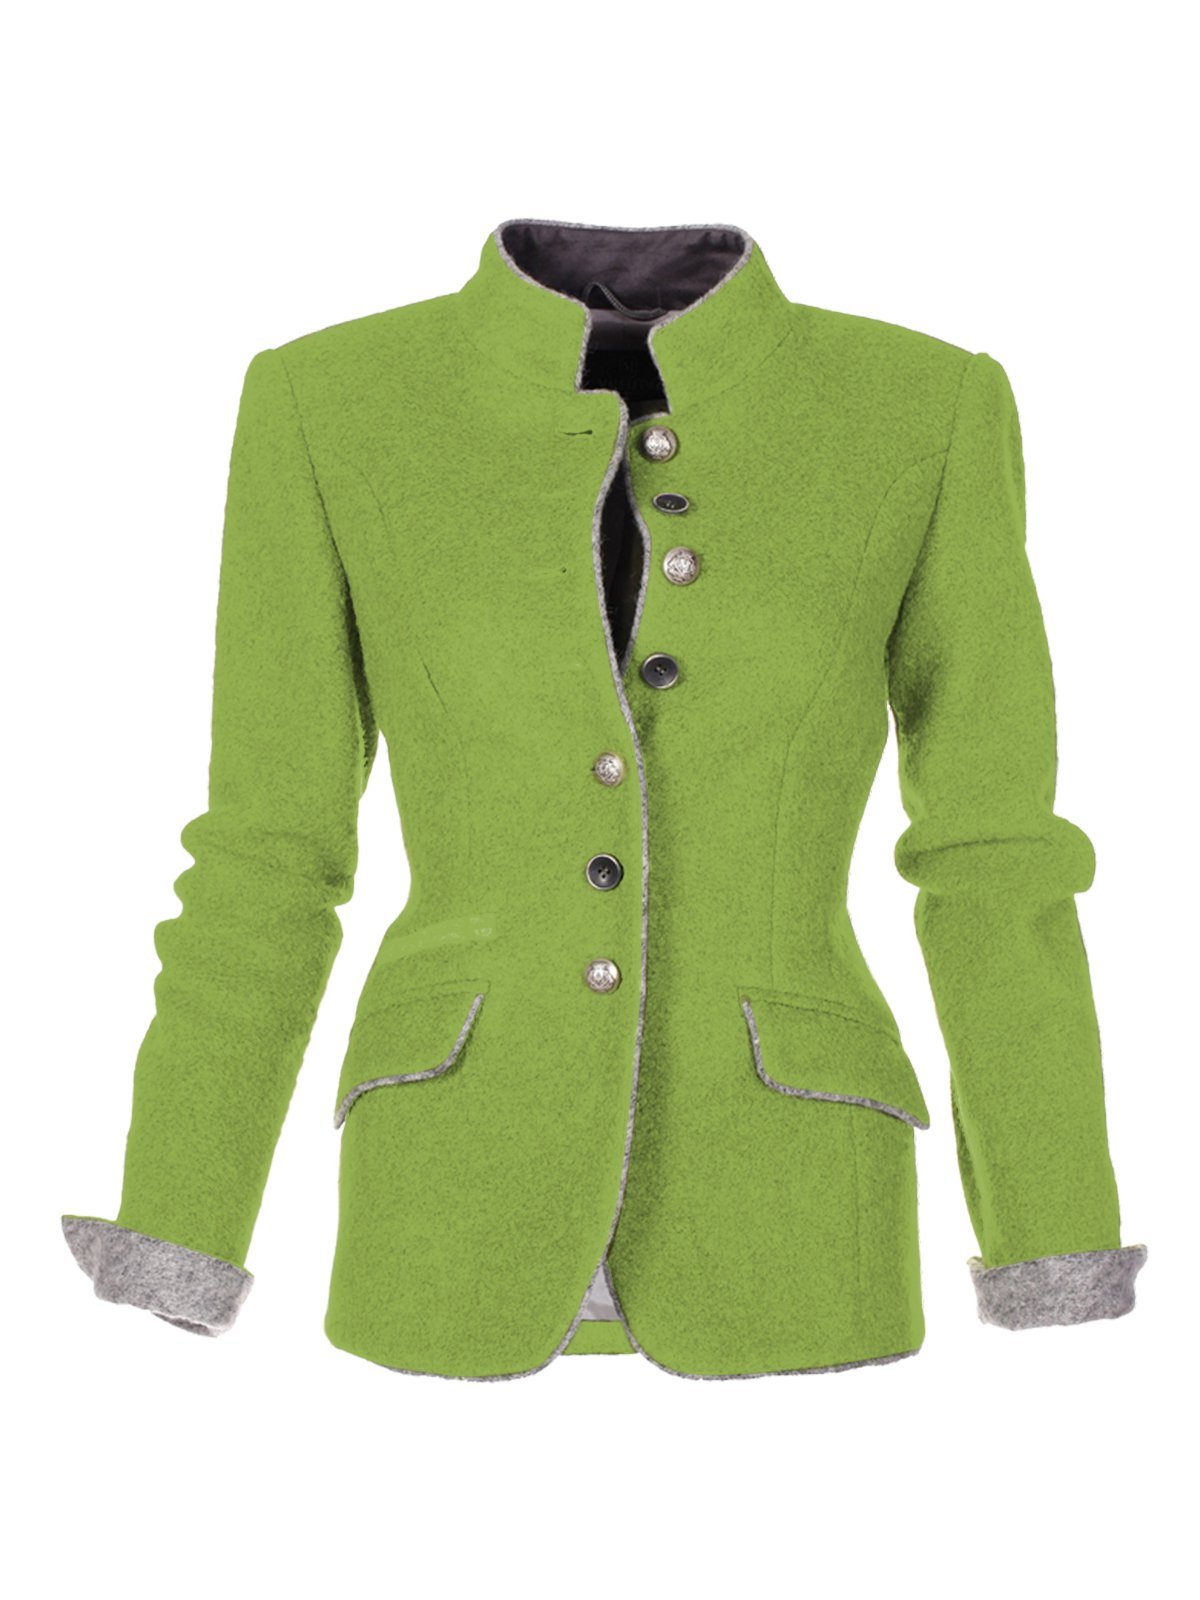 Aovica-zolucky Solid Vintage Blazer Stand Collar Jacket